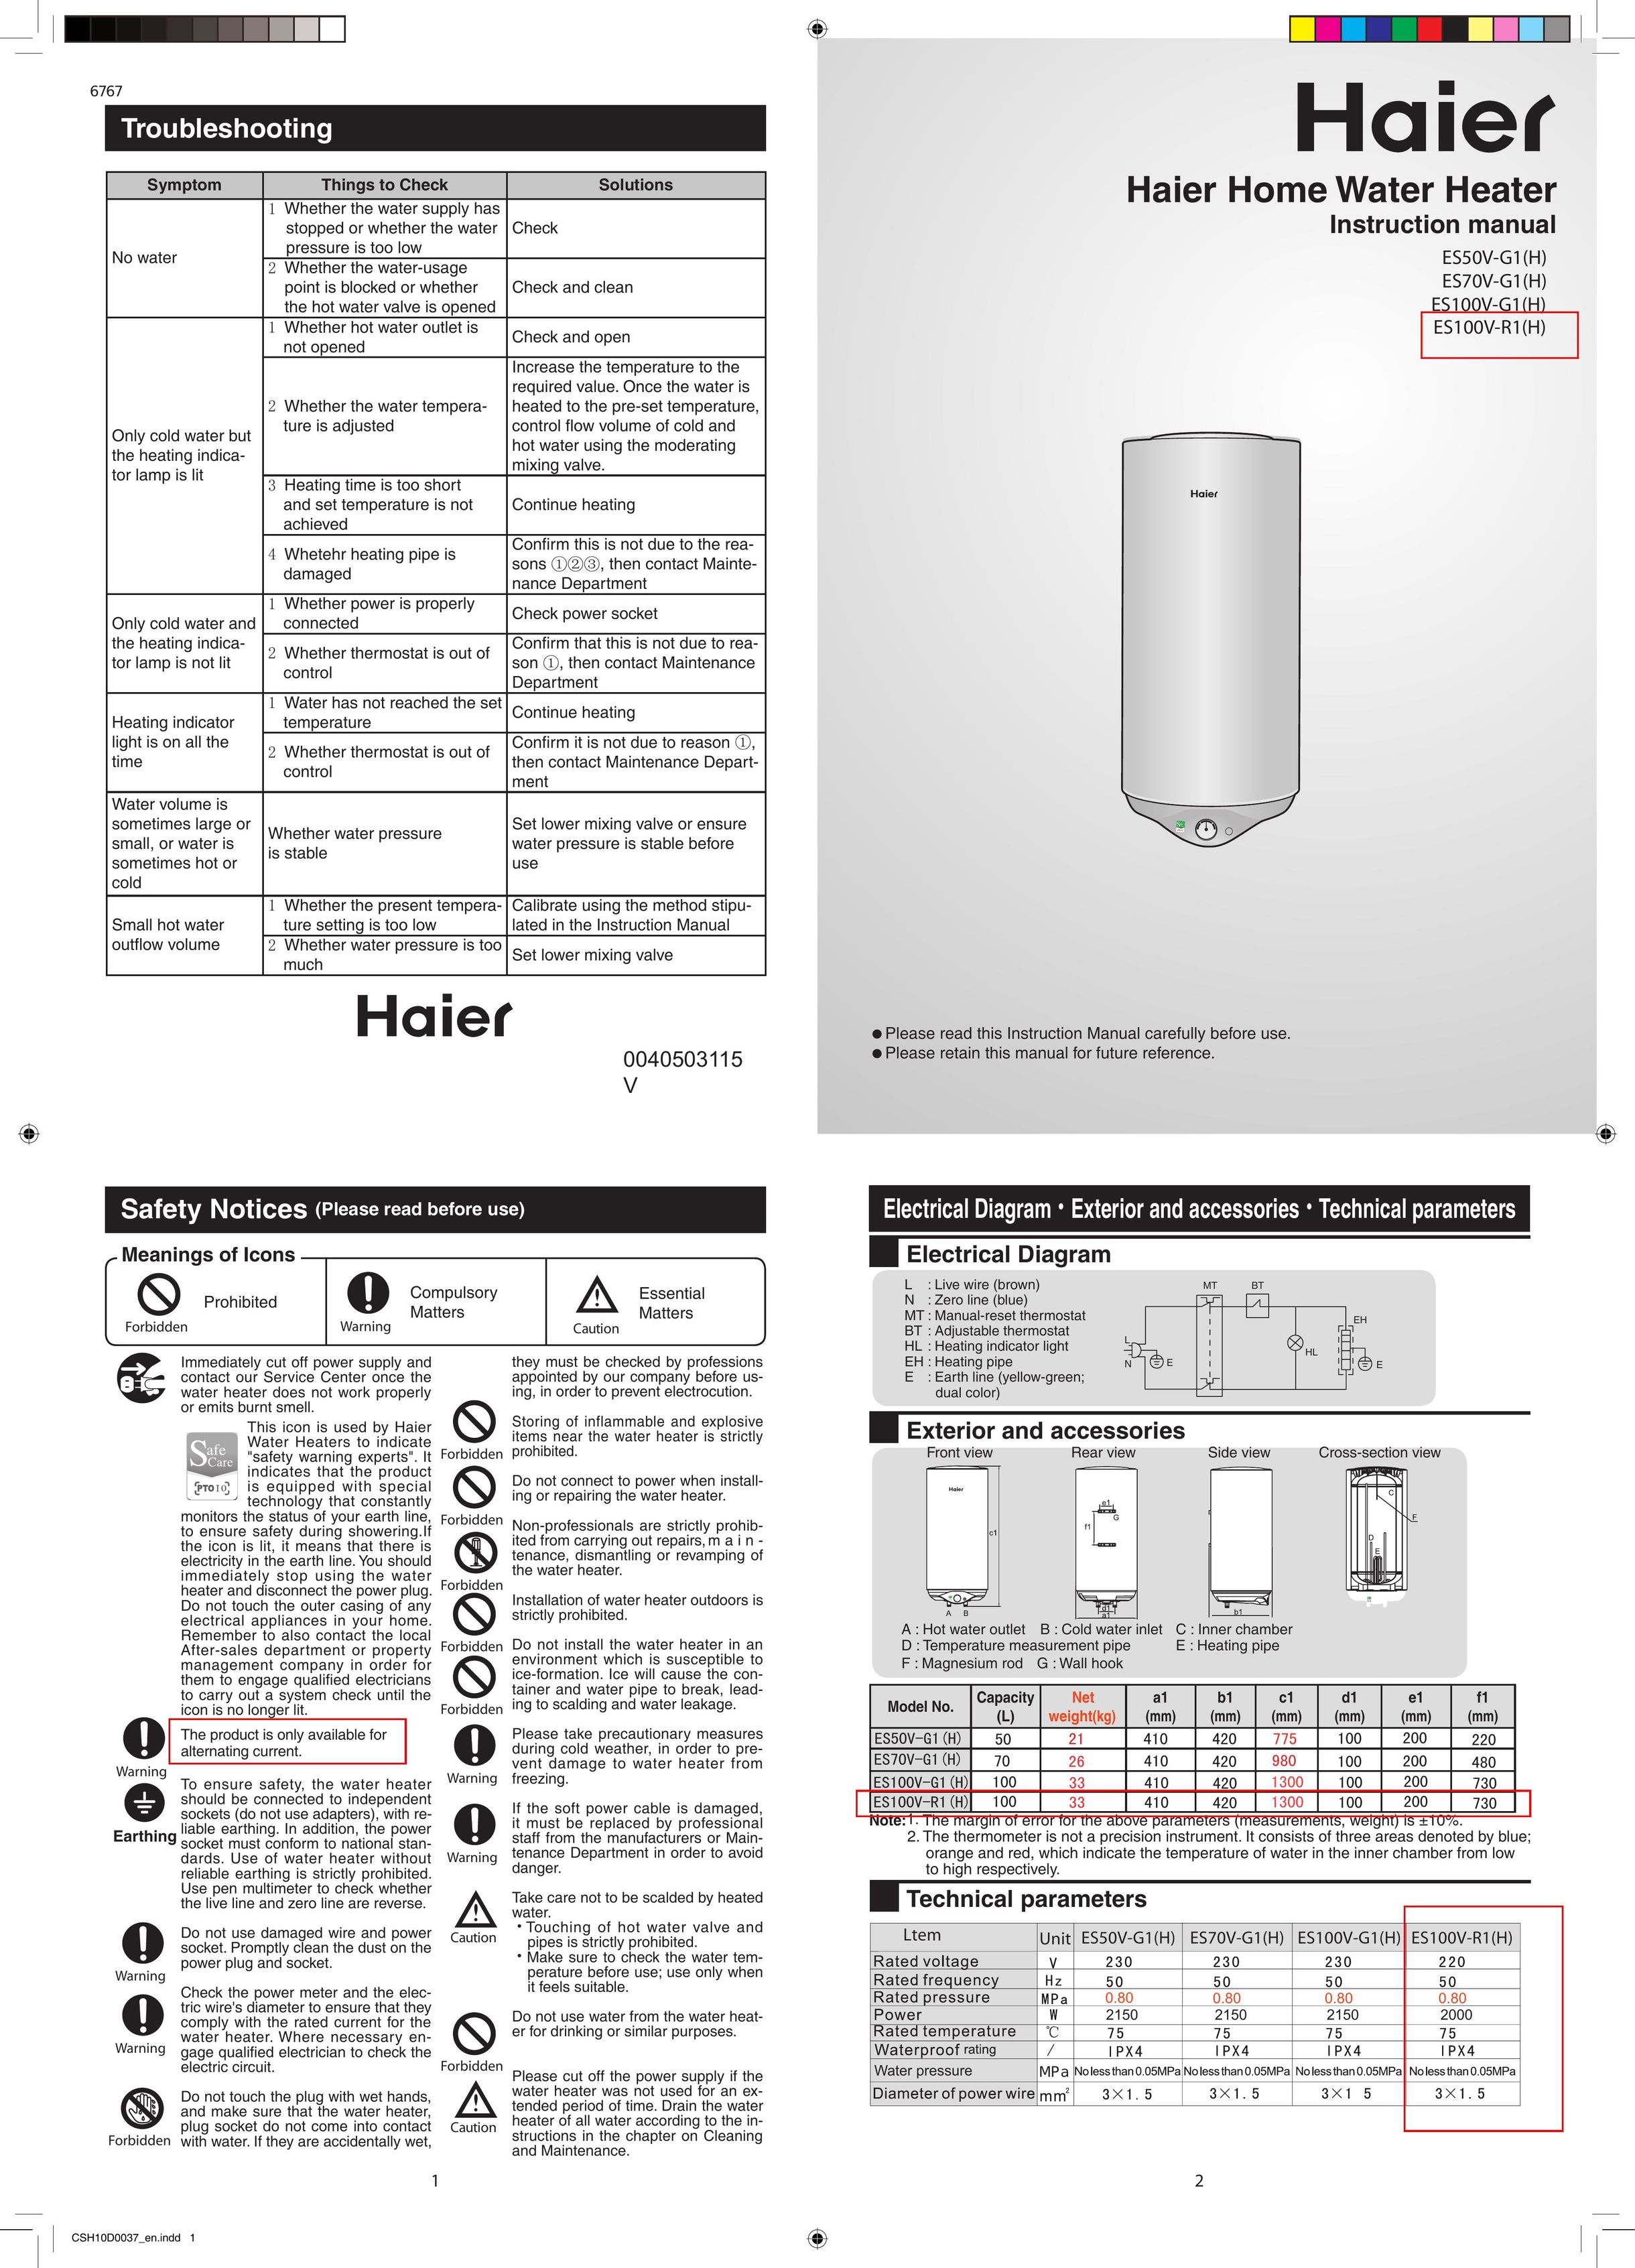 Haier ES50V-G1(H) Water Heater User Manual